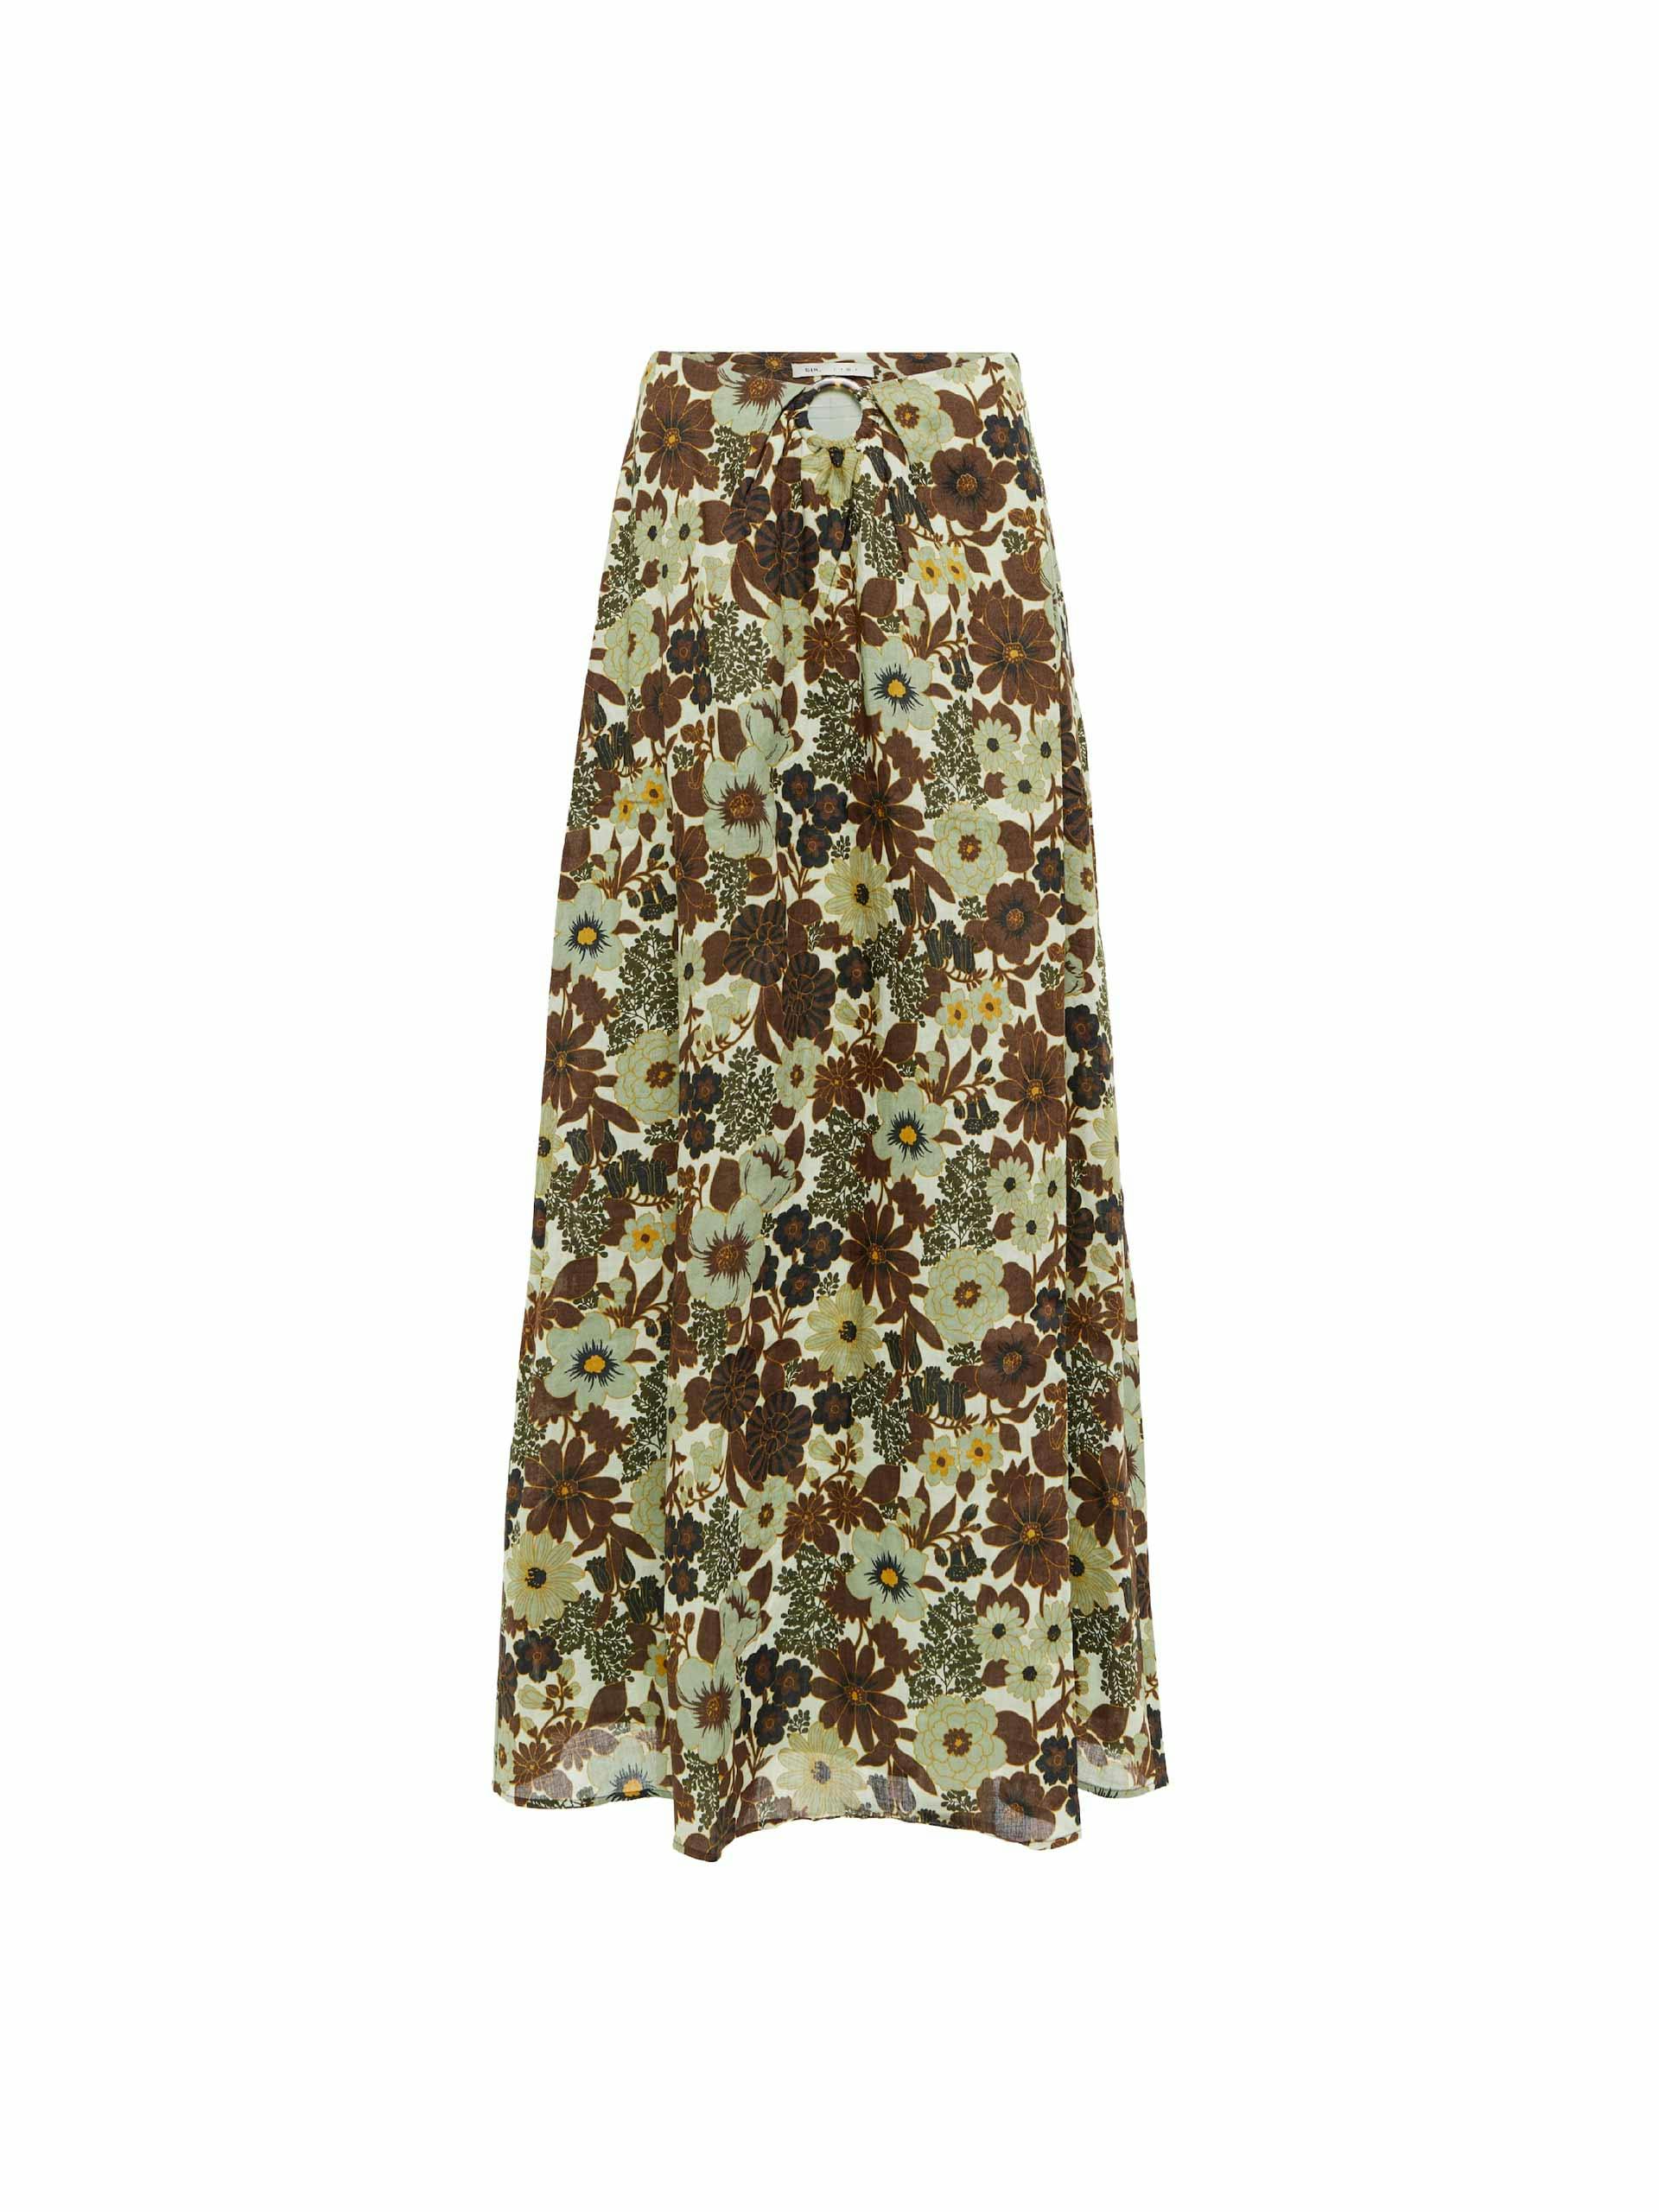 Brown floral print maxi skirt